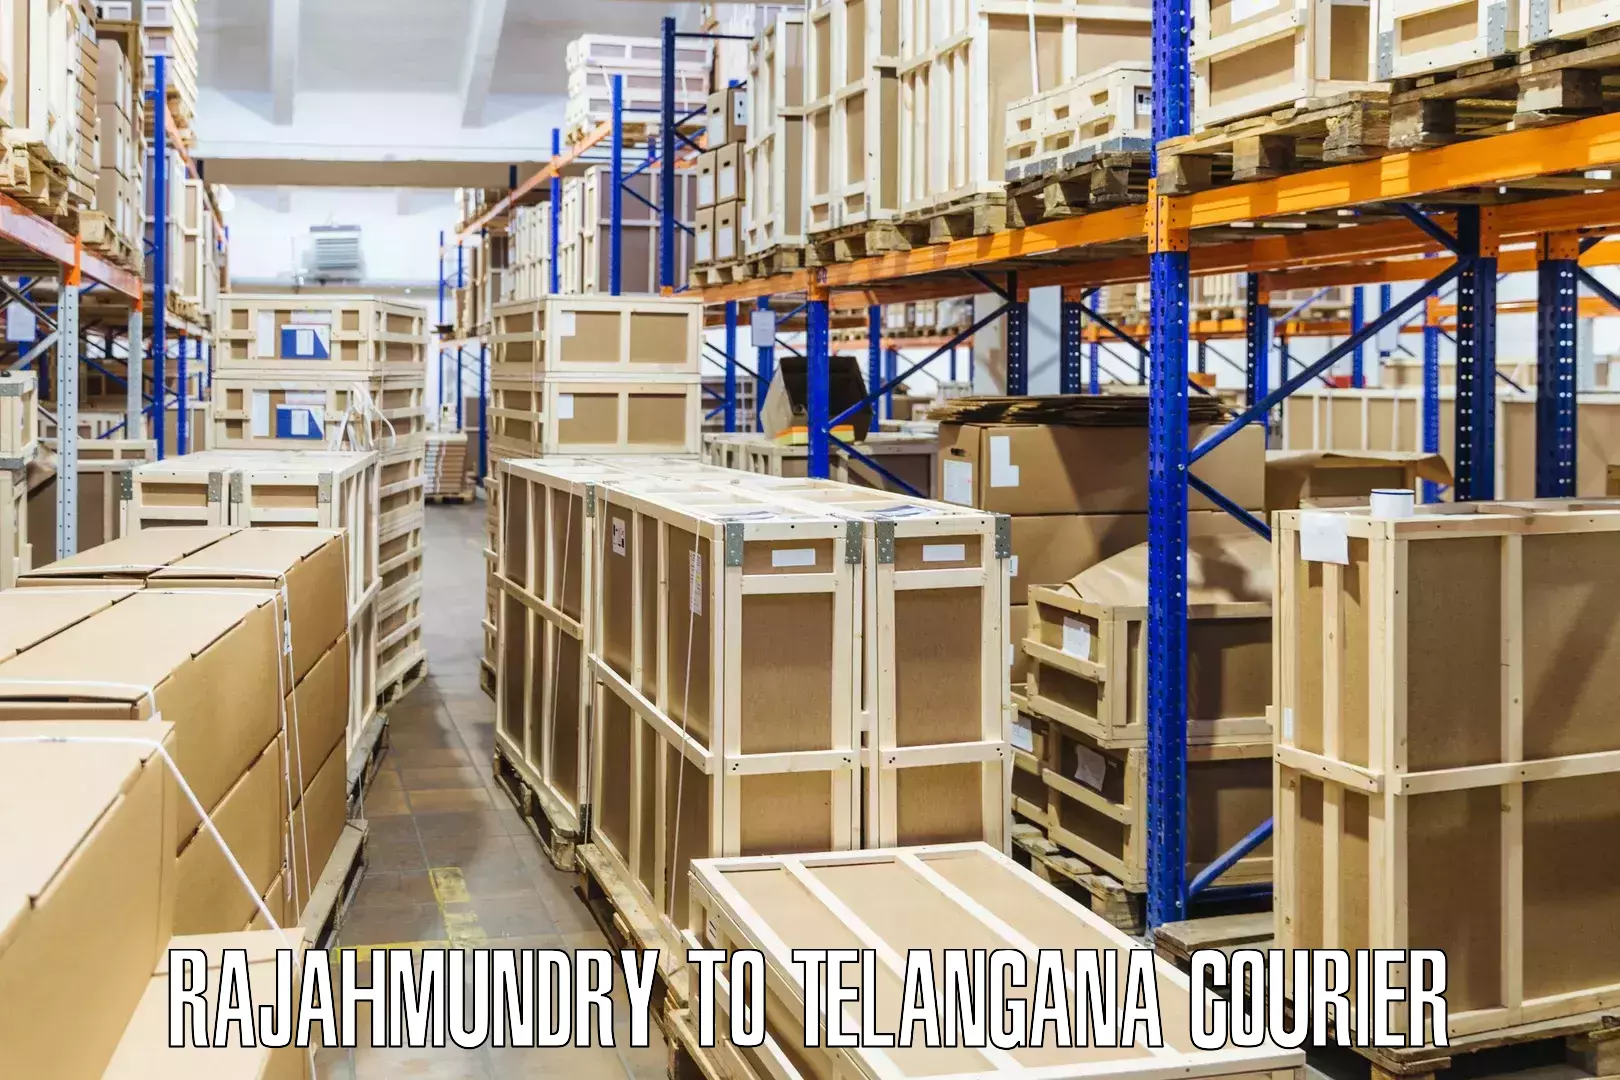 24-hour delivery options Rajahmundry to Telangana